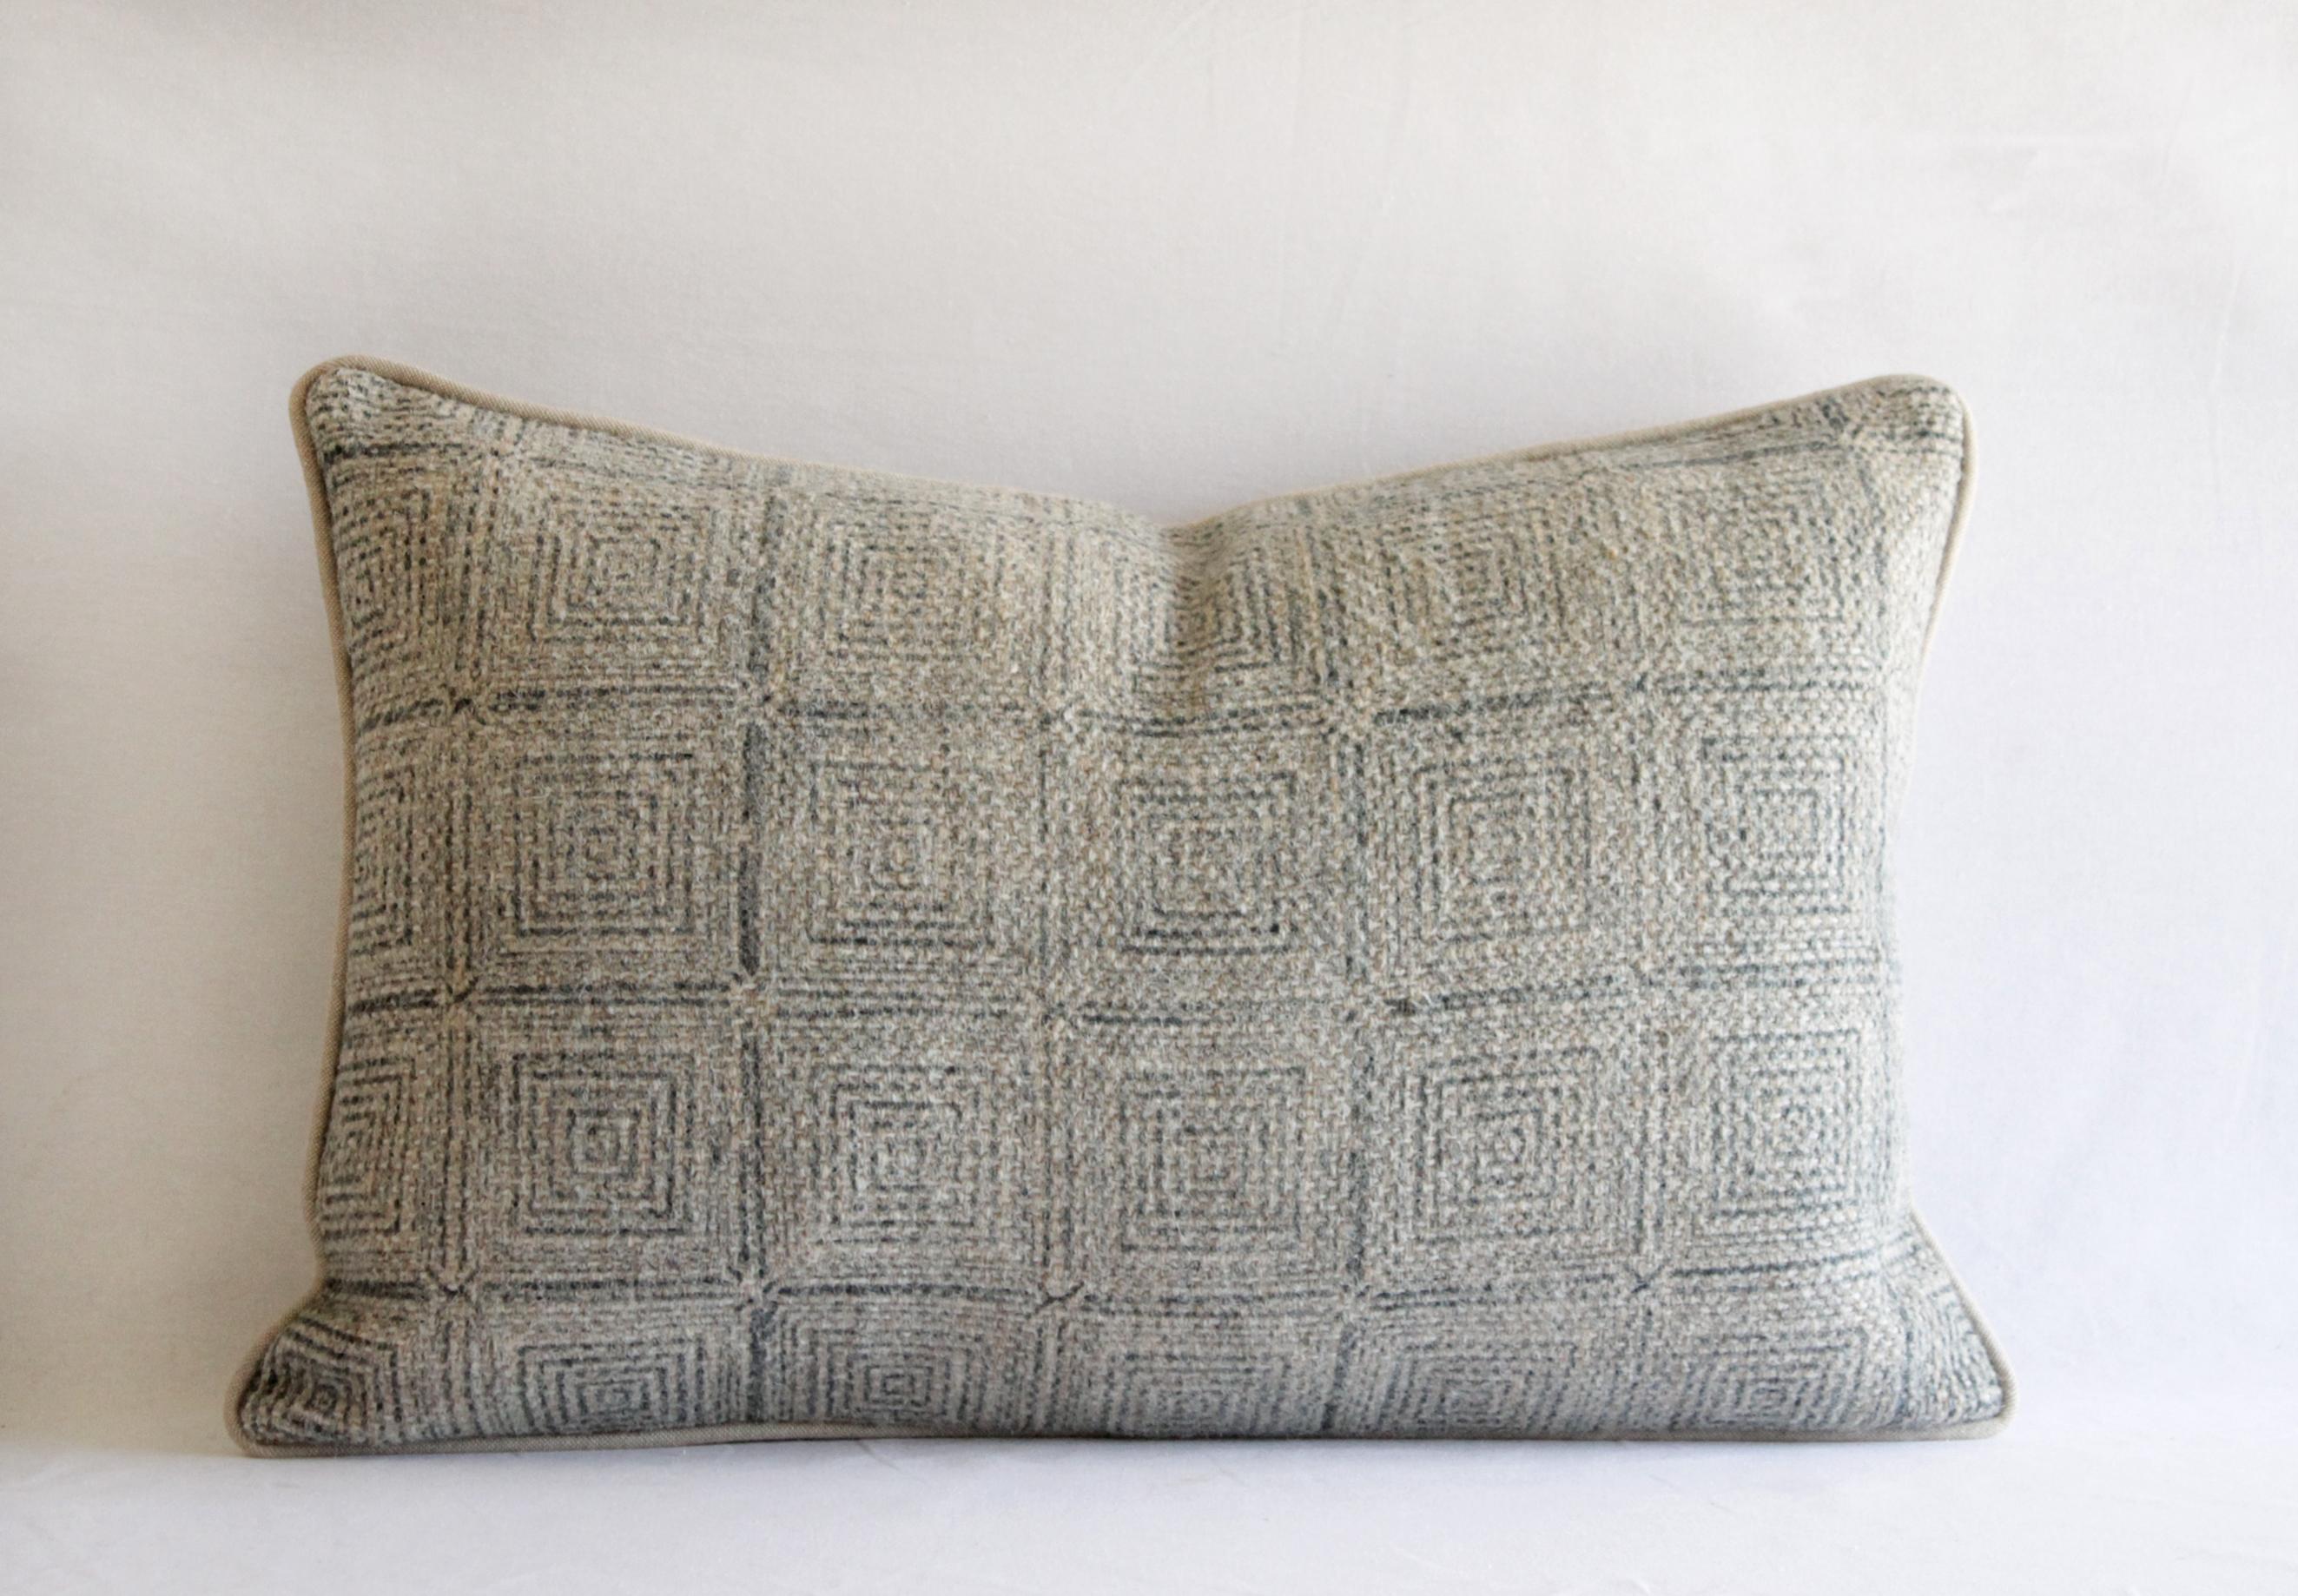 Wool Lumbar Pillows in Tan and Gray Pattern 1